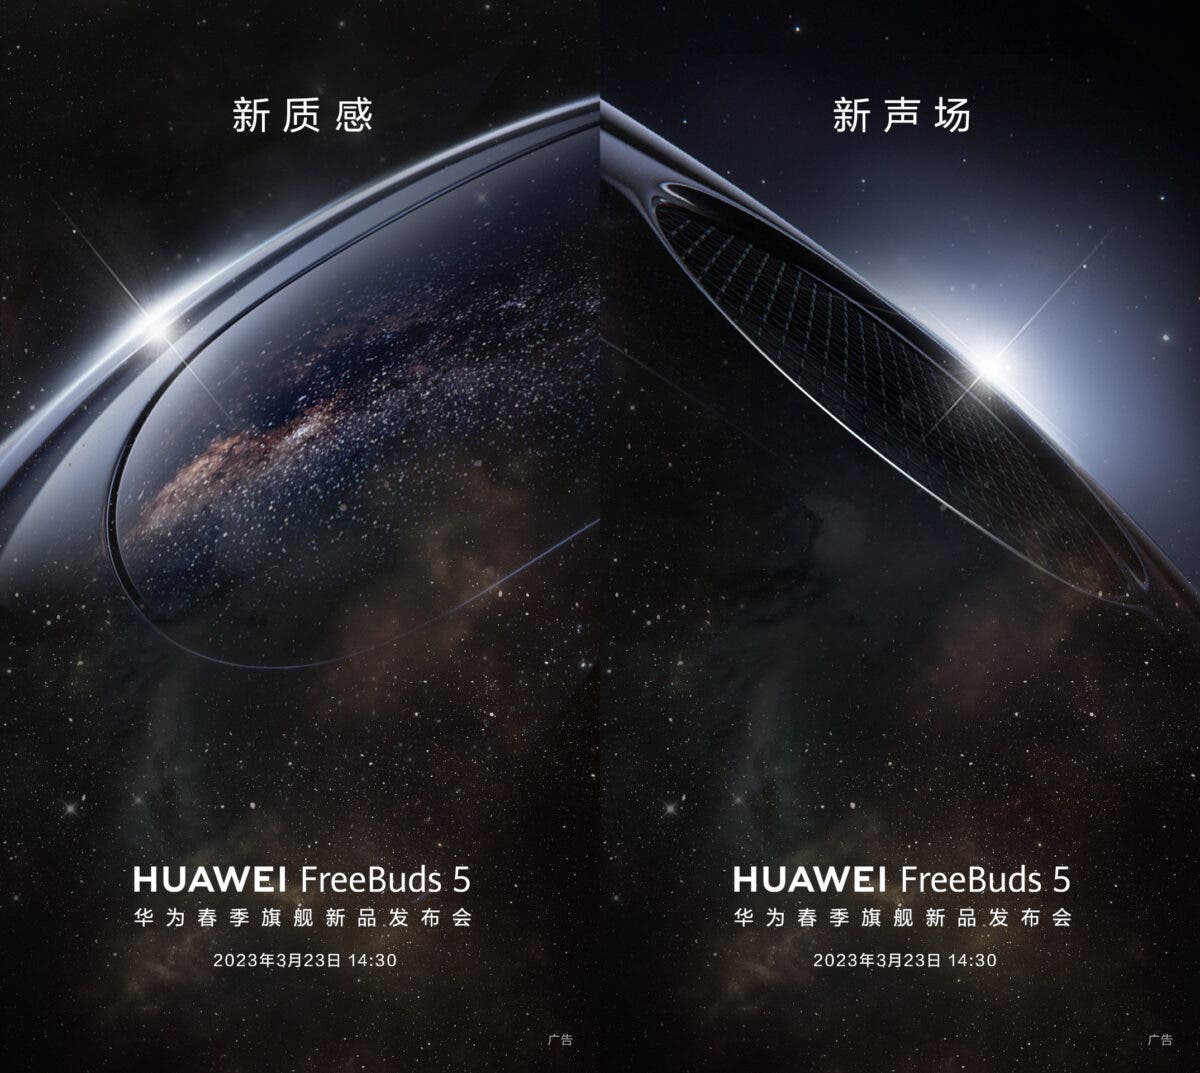 Official teaser reveals Huawei FreeBuds 5's new water drop design & launch  date - Gizmochina